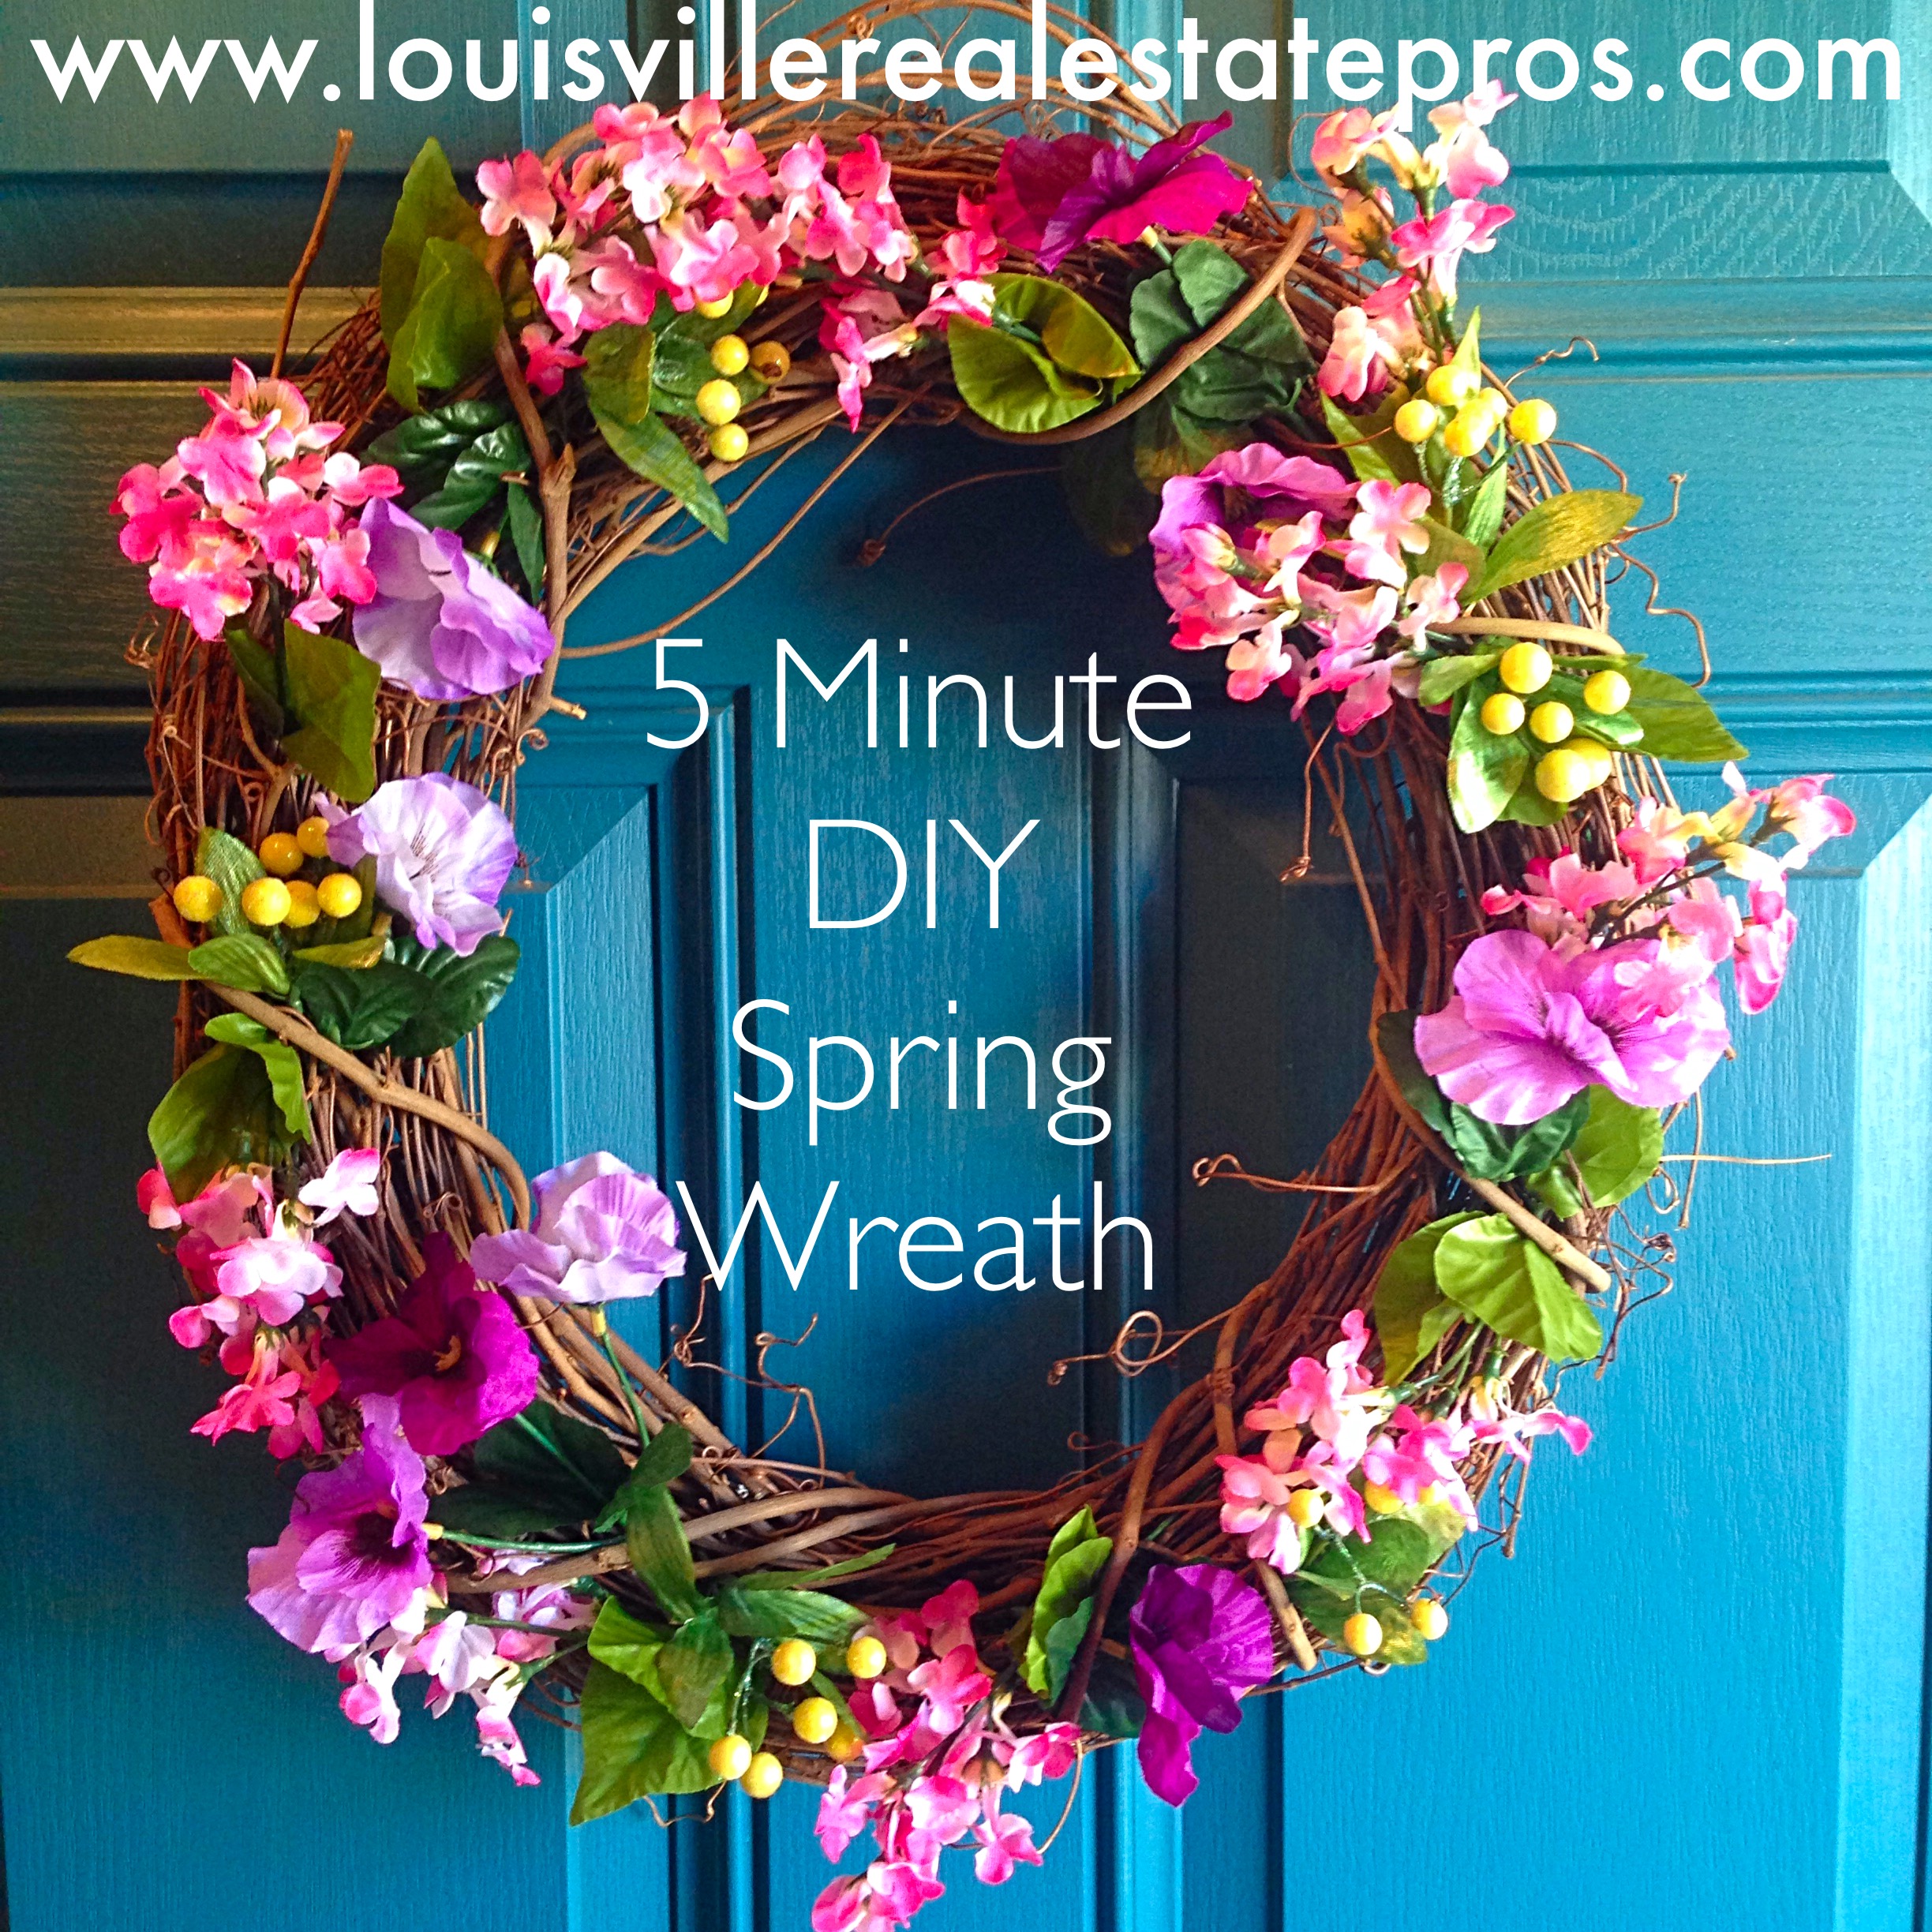 5 Minute DIY Spring Wreath